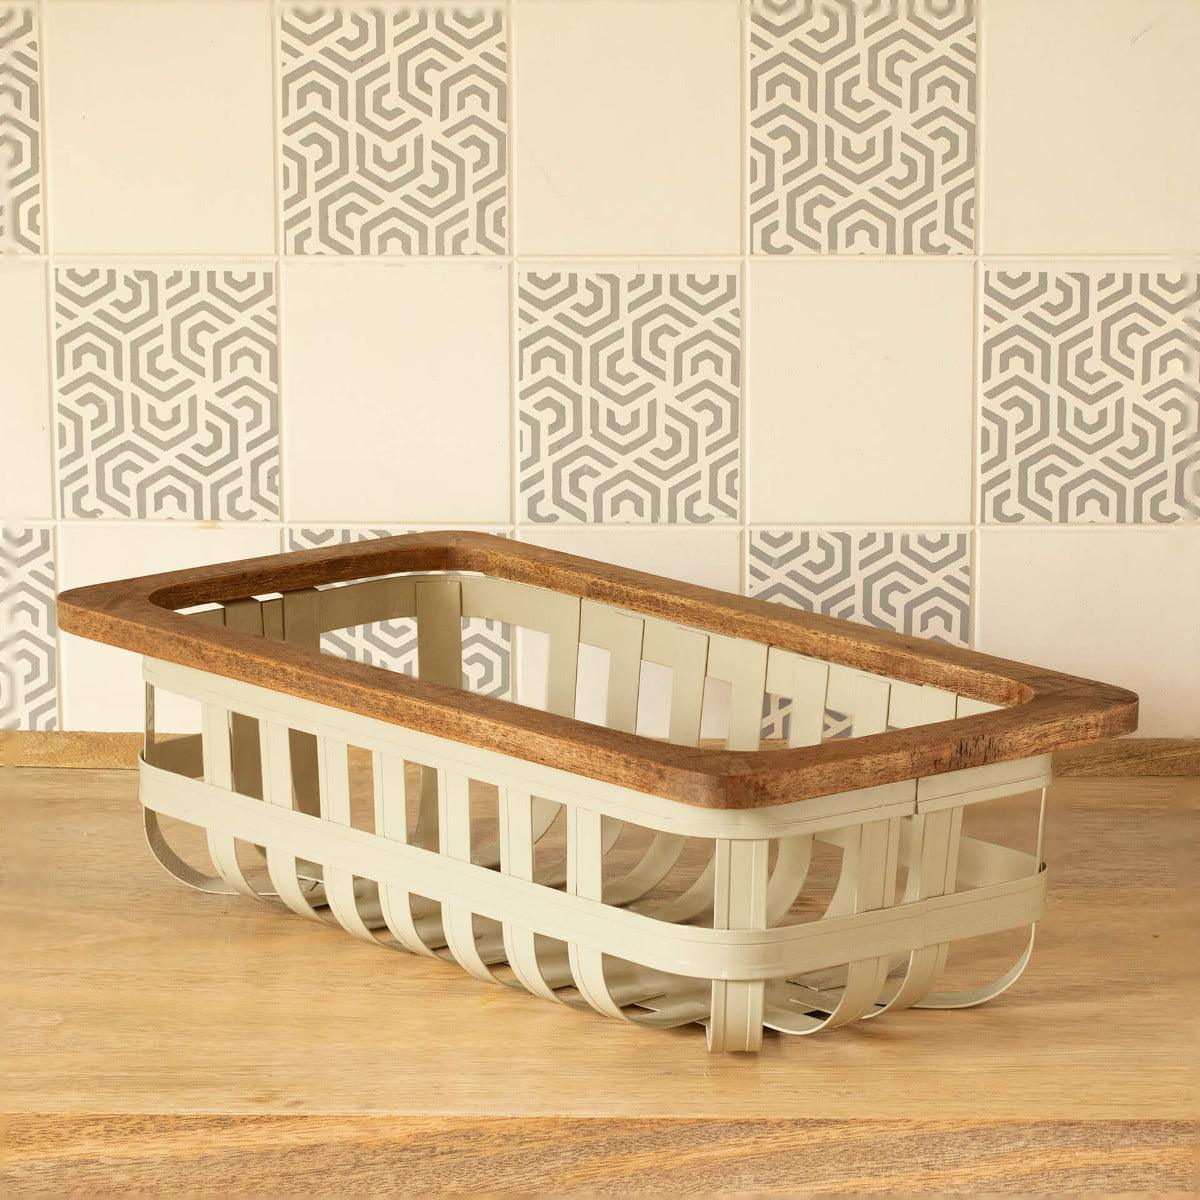 egg shell rectangular metal basket with wooden trim